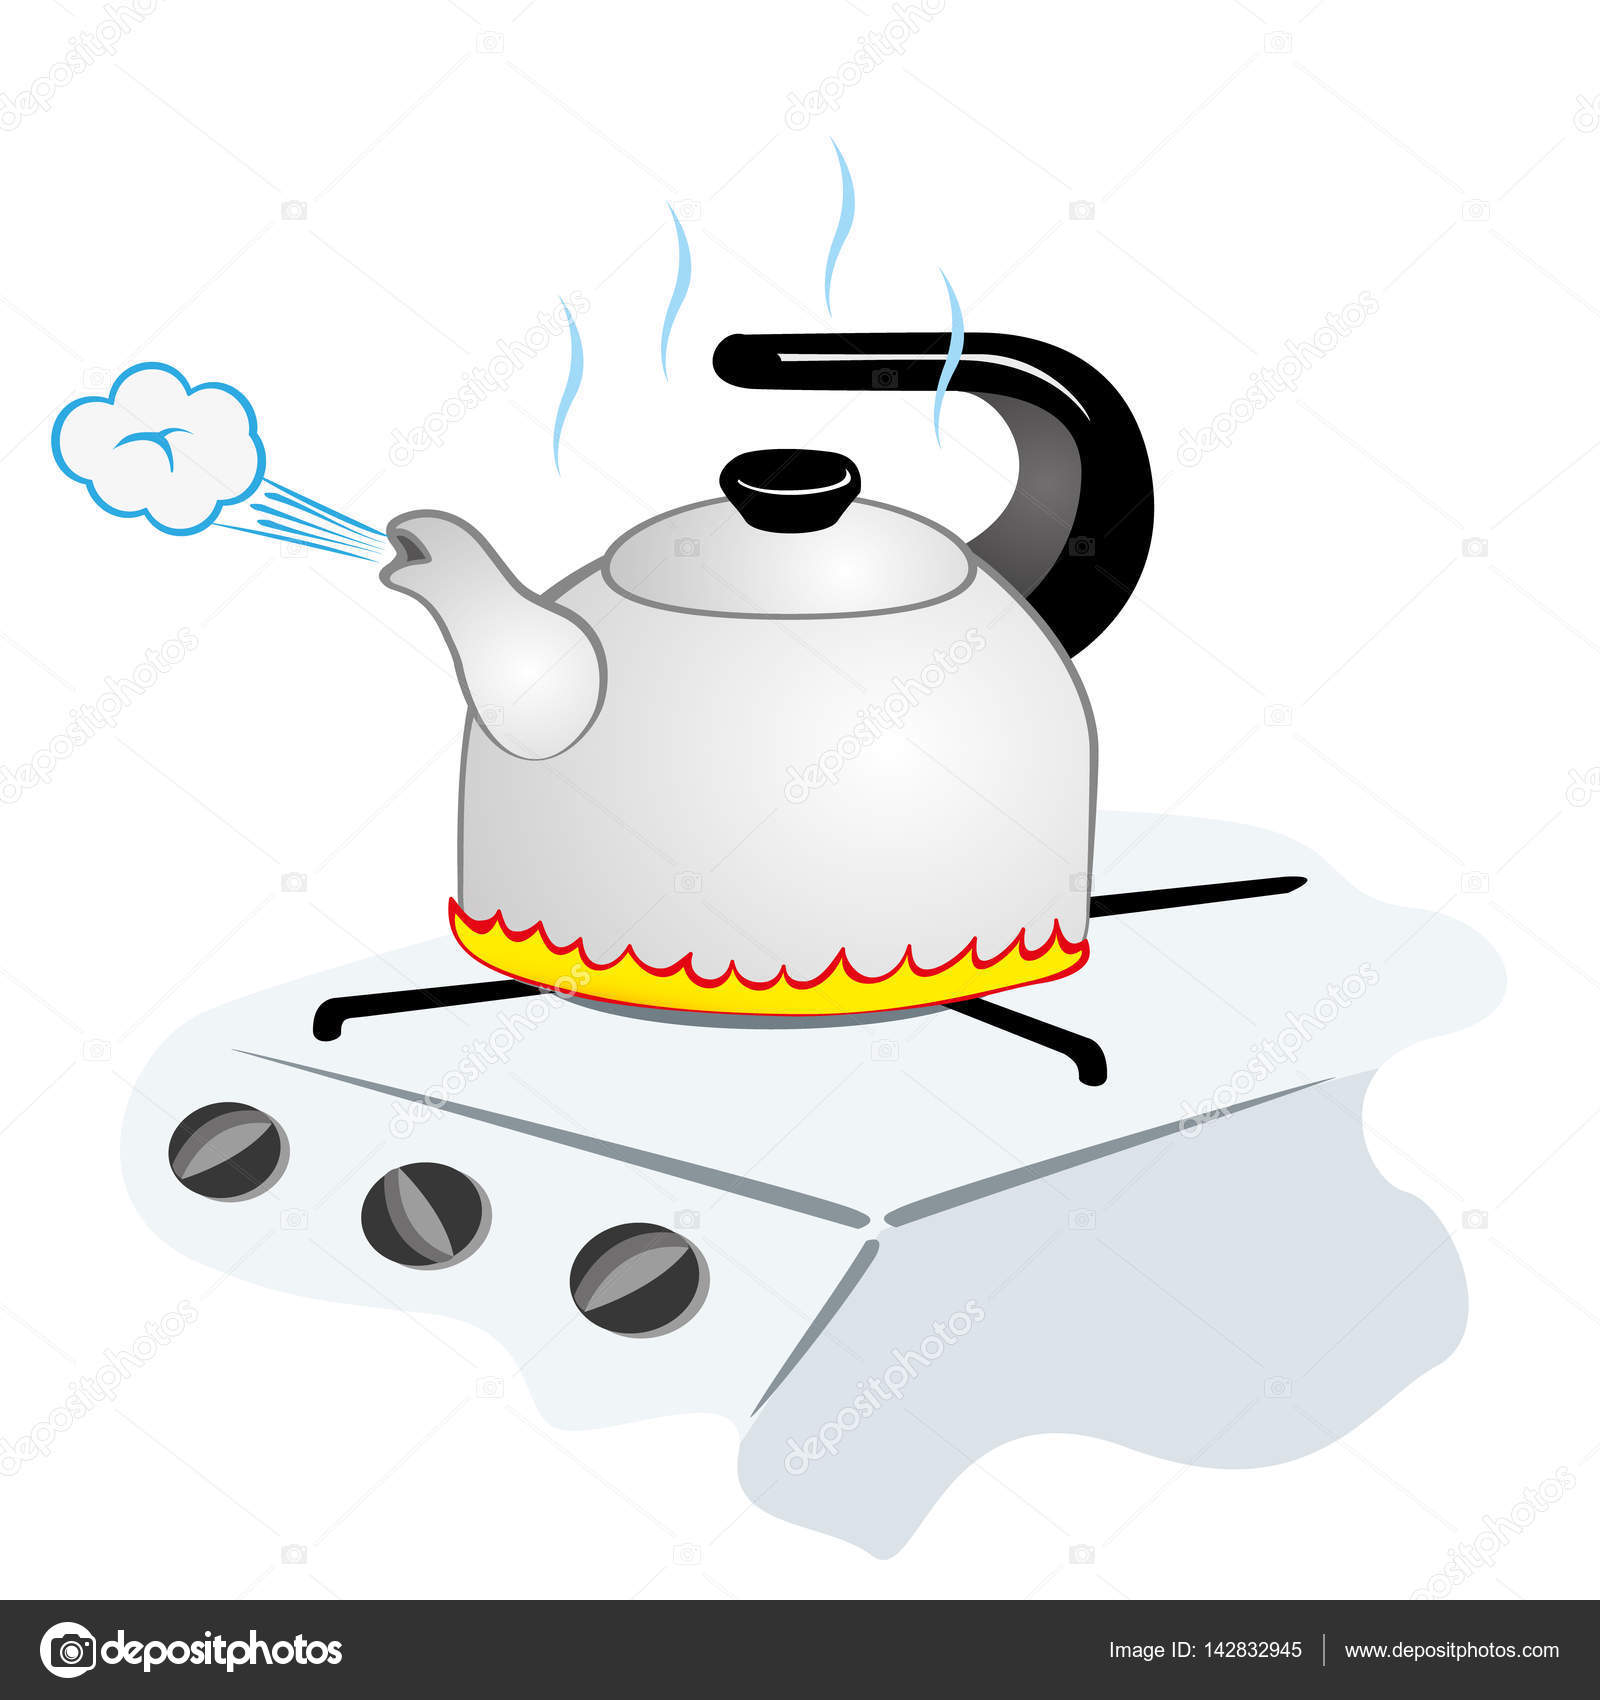 https://st3.depositphotos.com/4297405/14283/v/1600/depositphotos_142832945-stock-illustration-illustration-representing-a-kettle-with.jpg